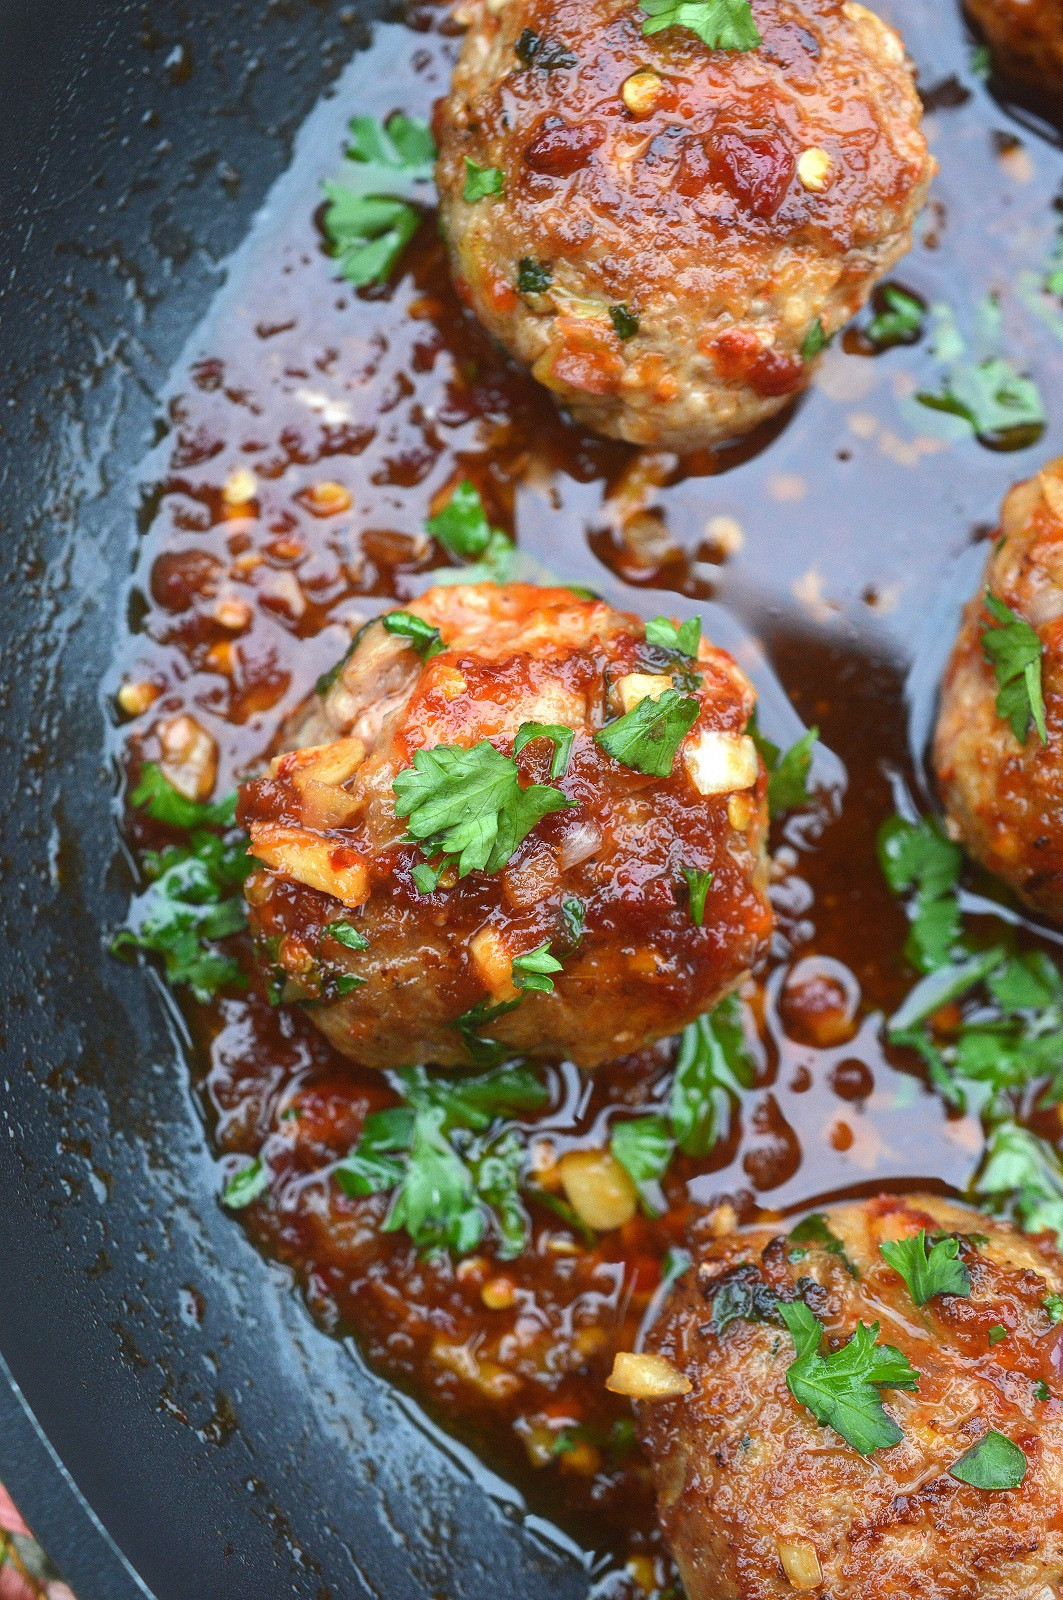 Recipes Using Ground Pork
 Asian Pork Meatballs With Ginger Honey Sauce Souffle Bombay